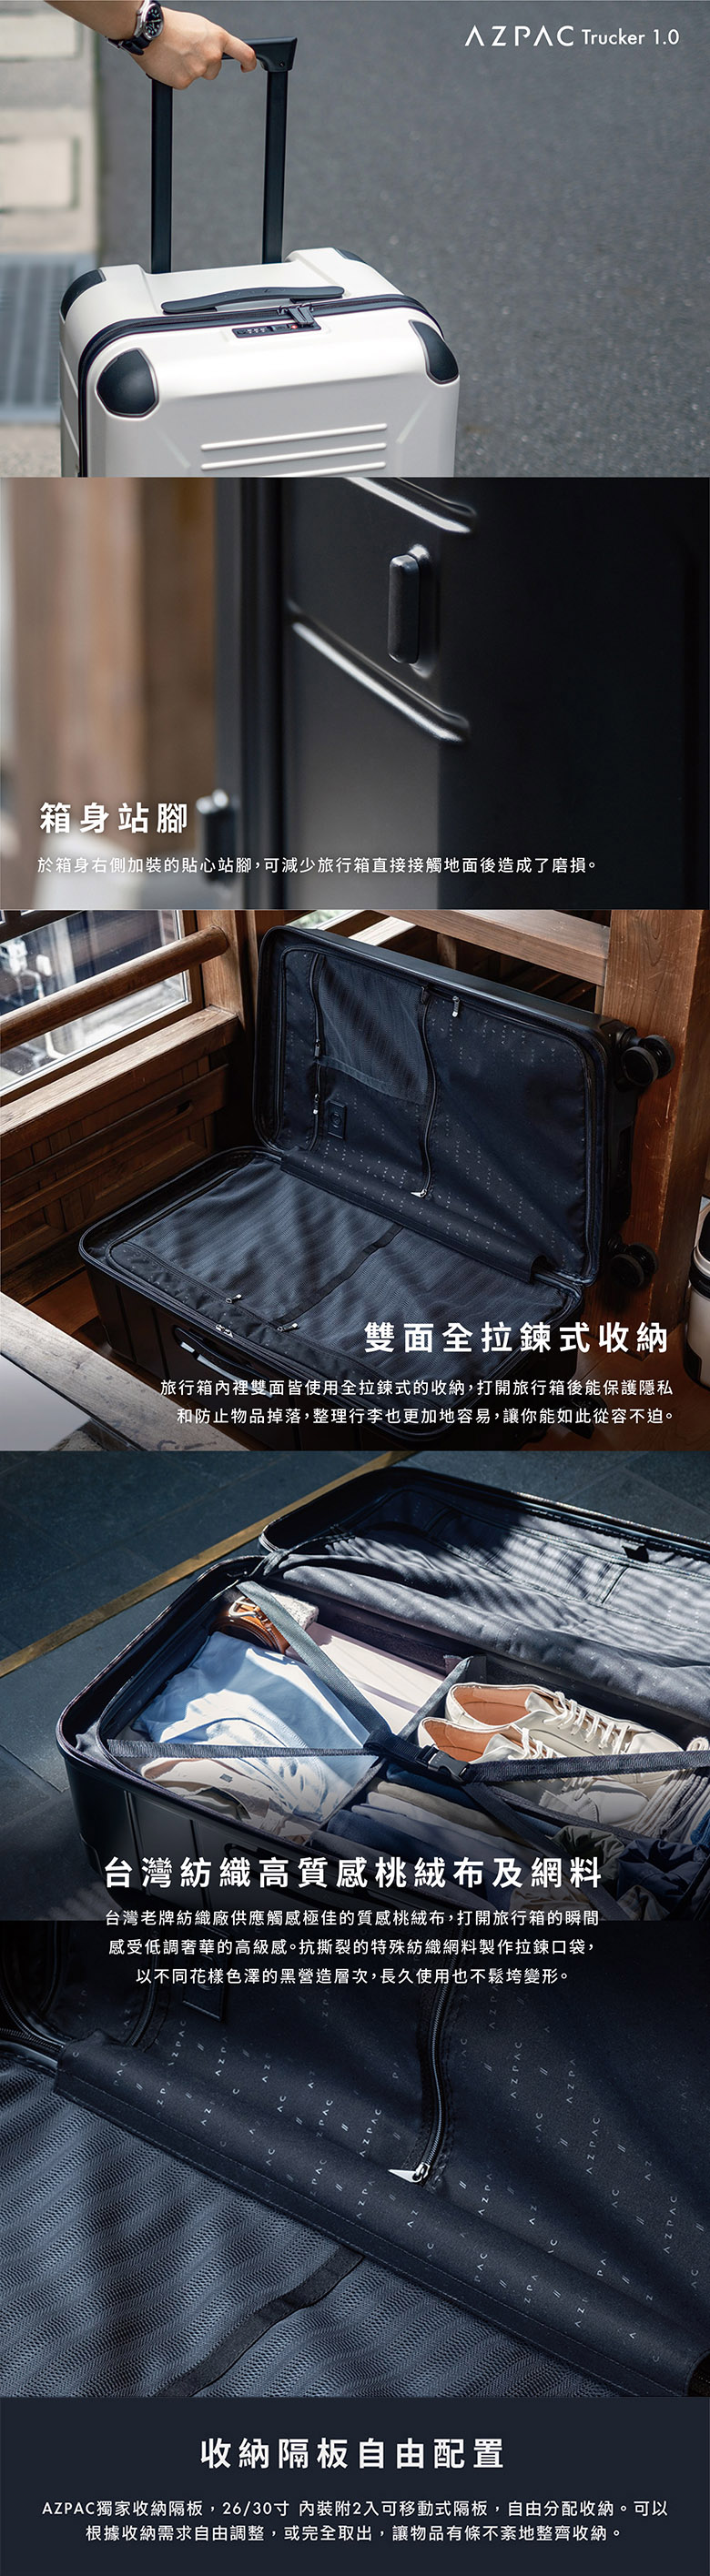 AZPAC 行李箱無煞車基本款(Basic) 更輕價格更實惠